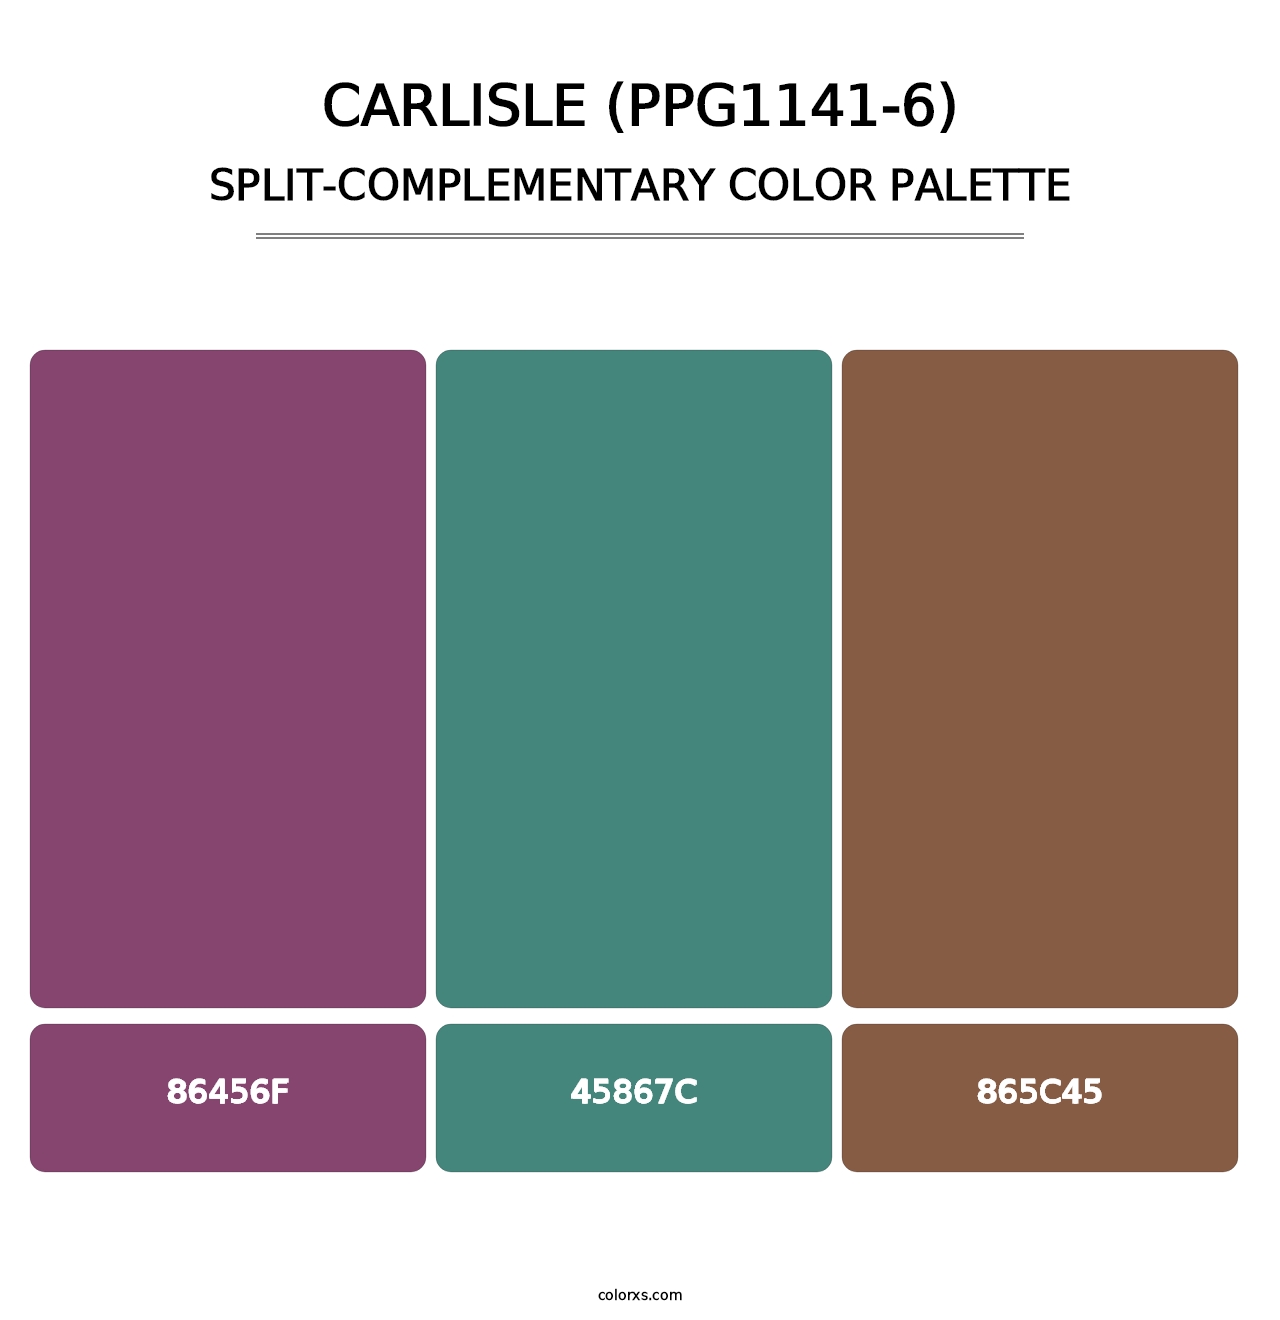 Carlisle (PPG1141-6) - Split-Complementary Color Palette